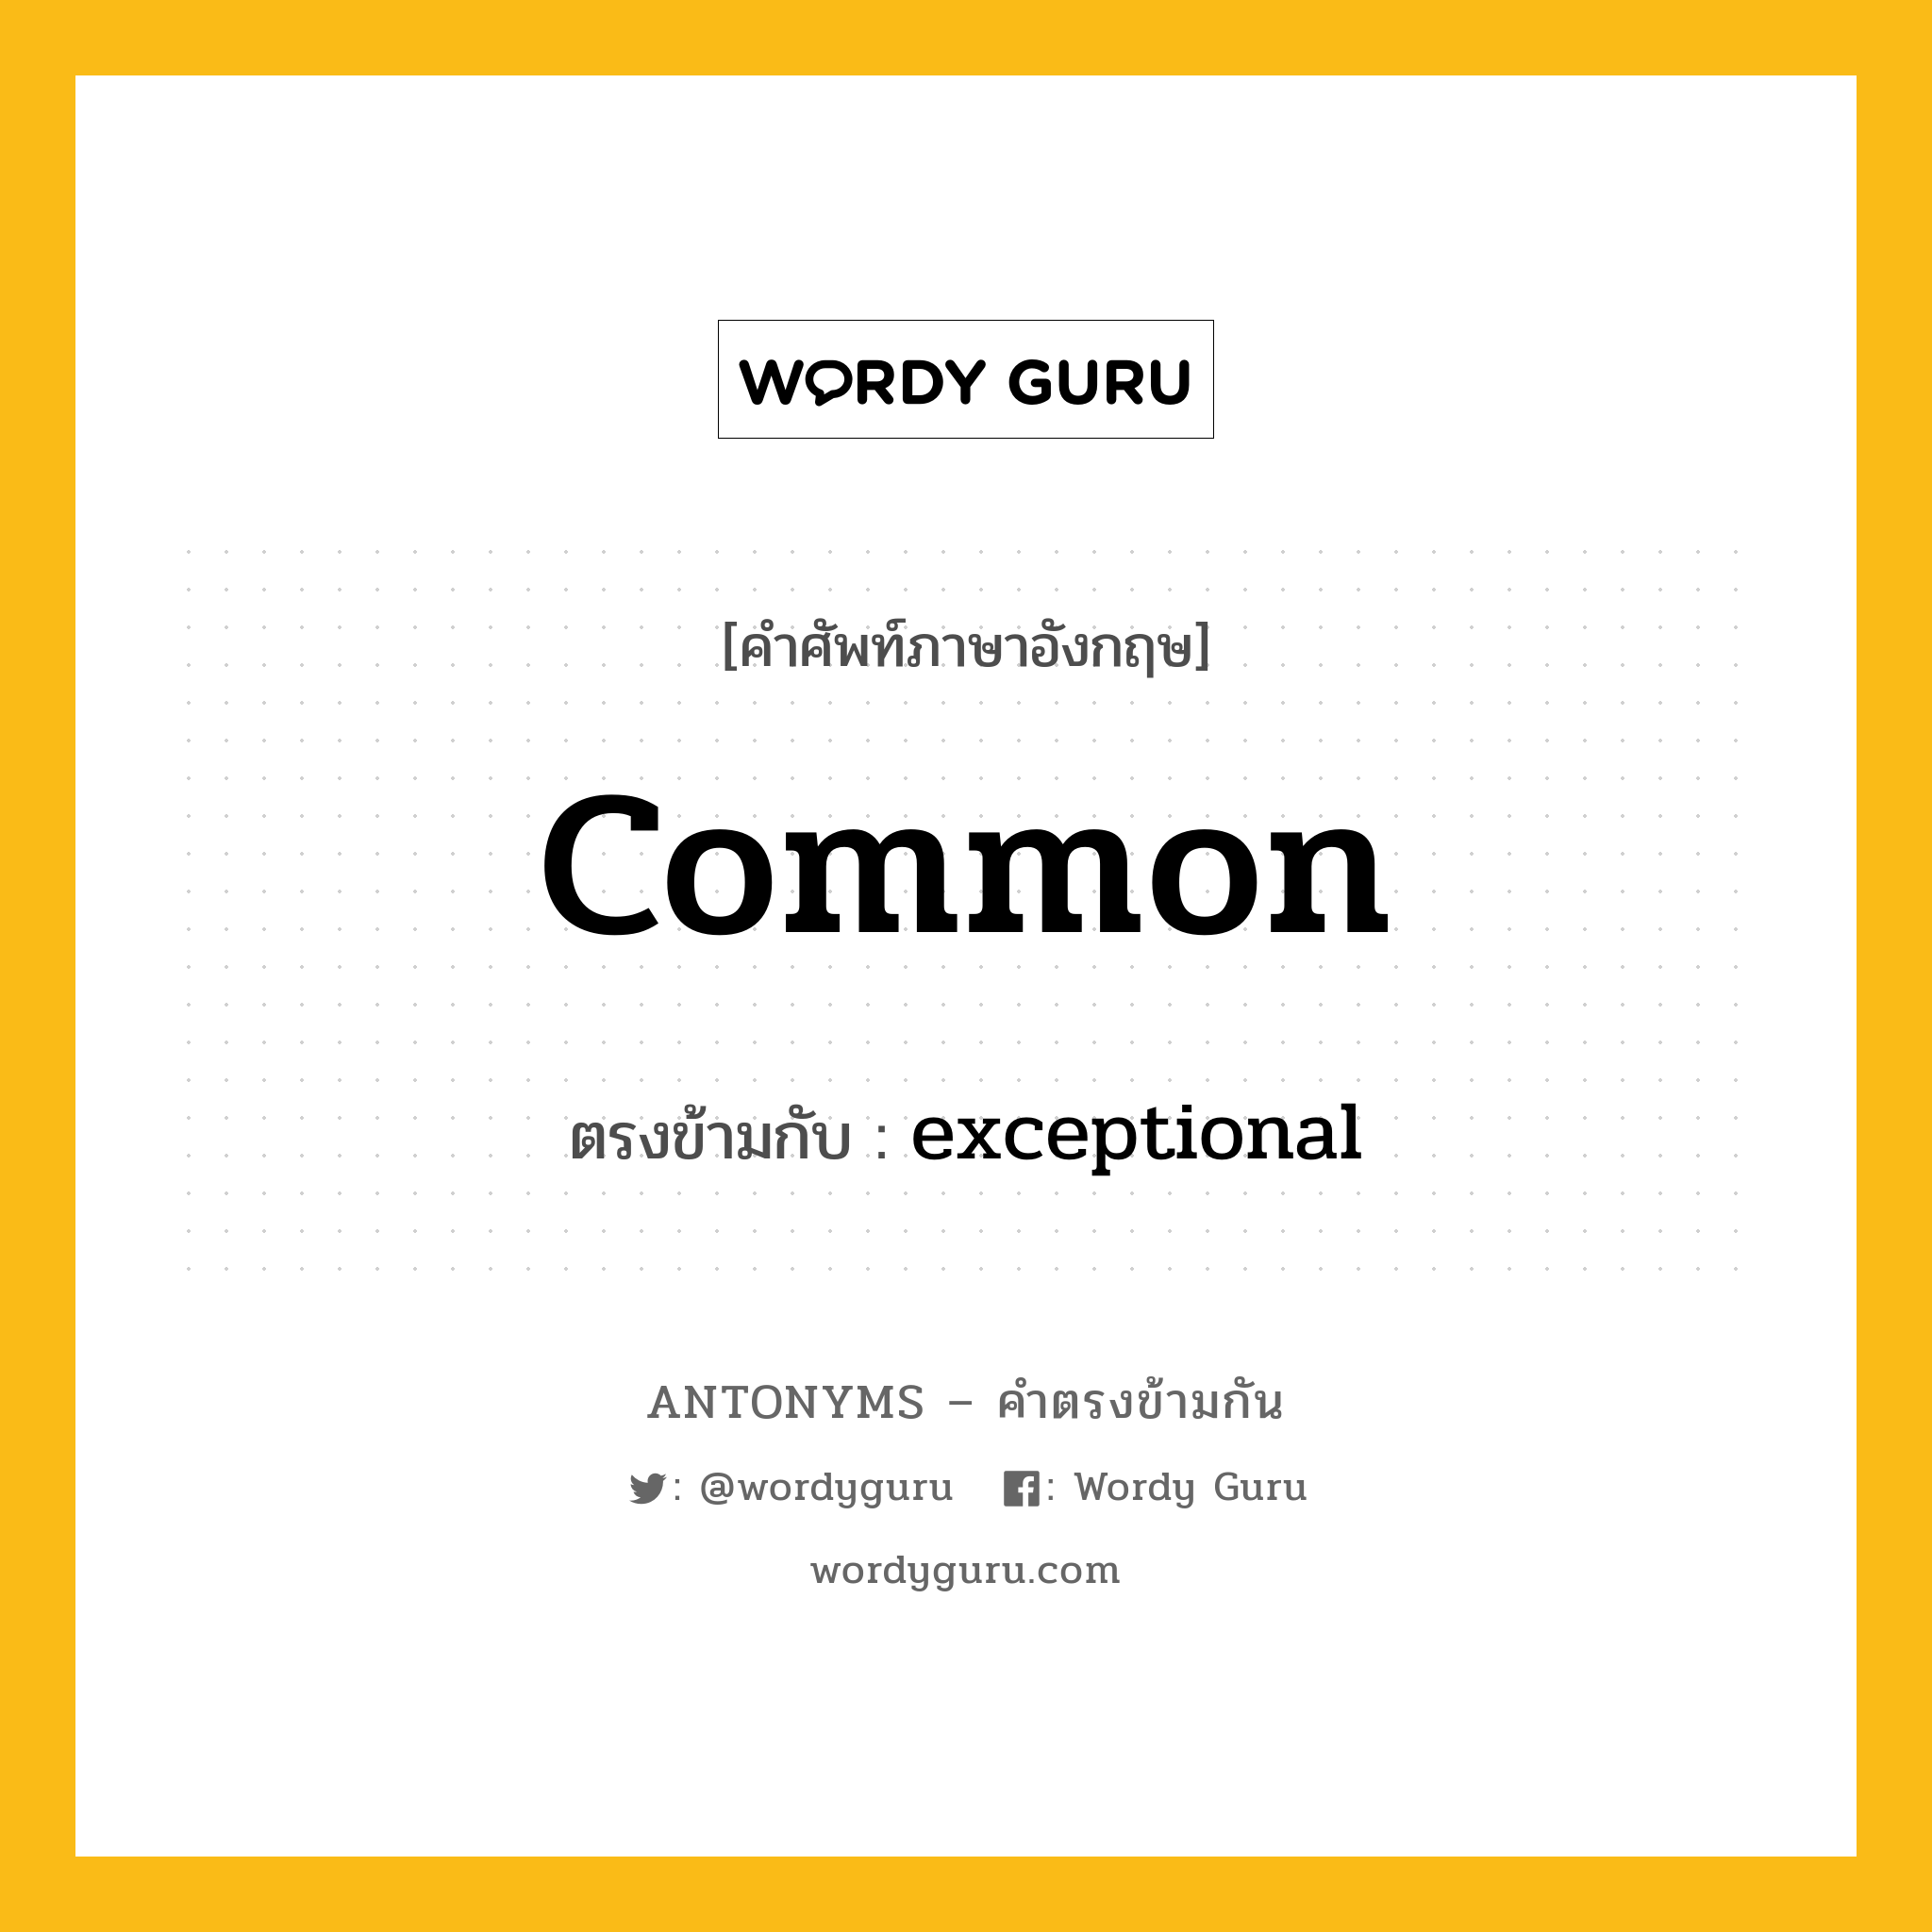 common เป็นคำตรงข้ามกับคำไหนบ้าง?, คำศัพท์ภาษาอังกฤษ common ตรงข้ามกับ exceptional หมวด exceptional